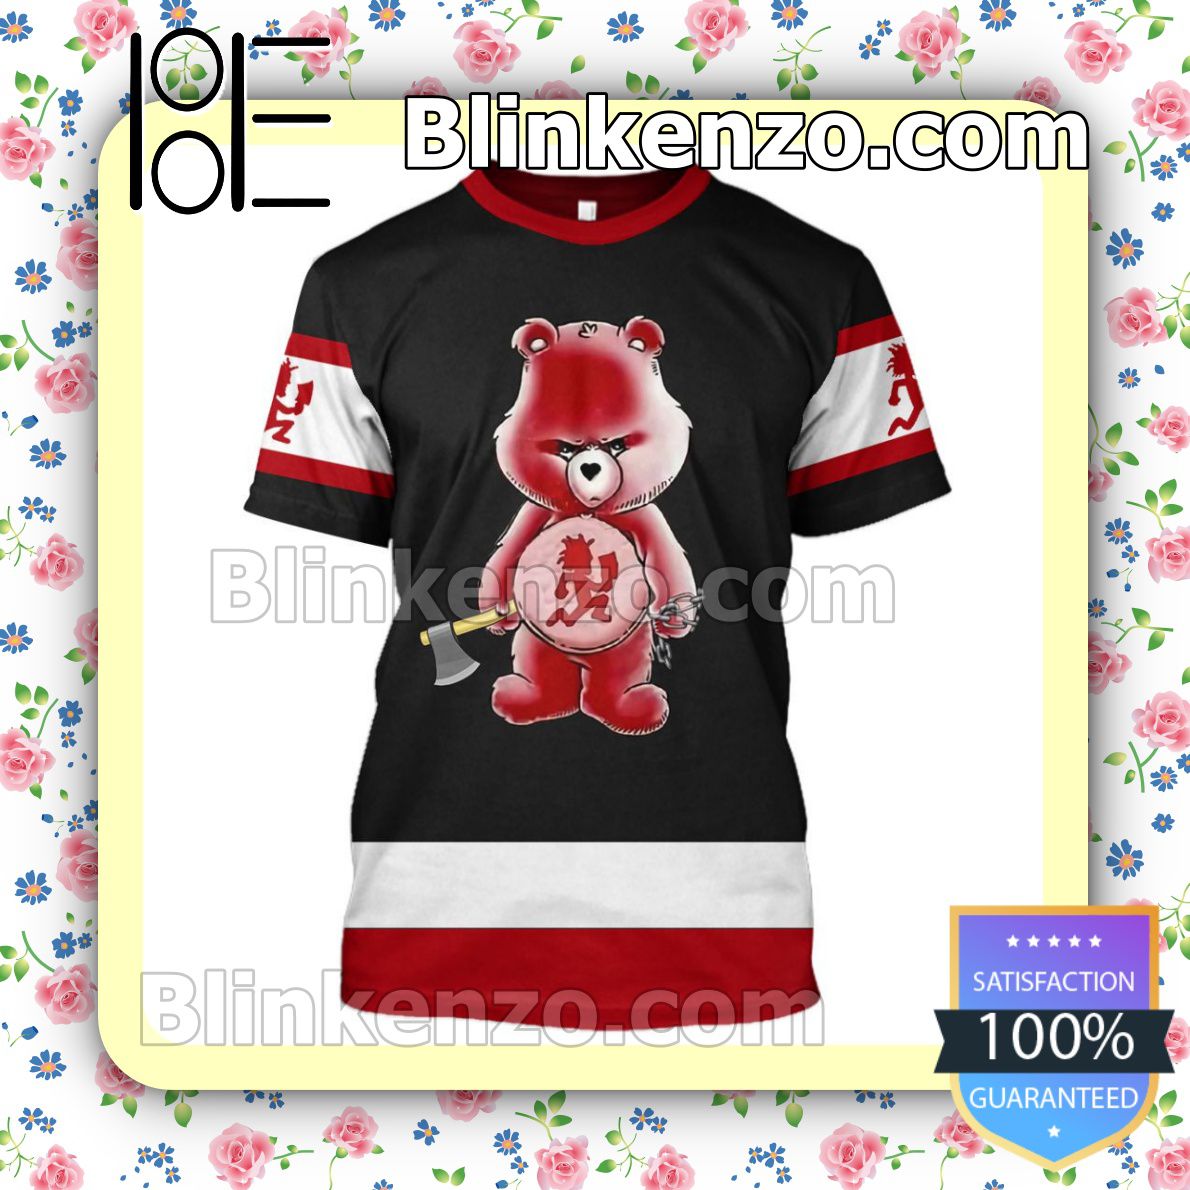 Personalized Insane Clown Posse Red Care Bear Custom Shirt